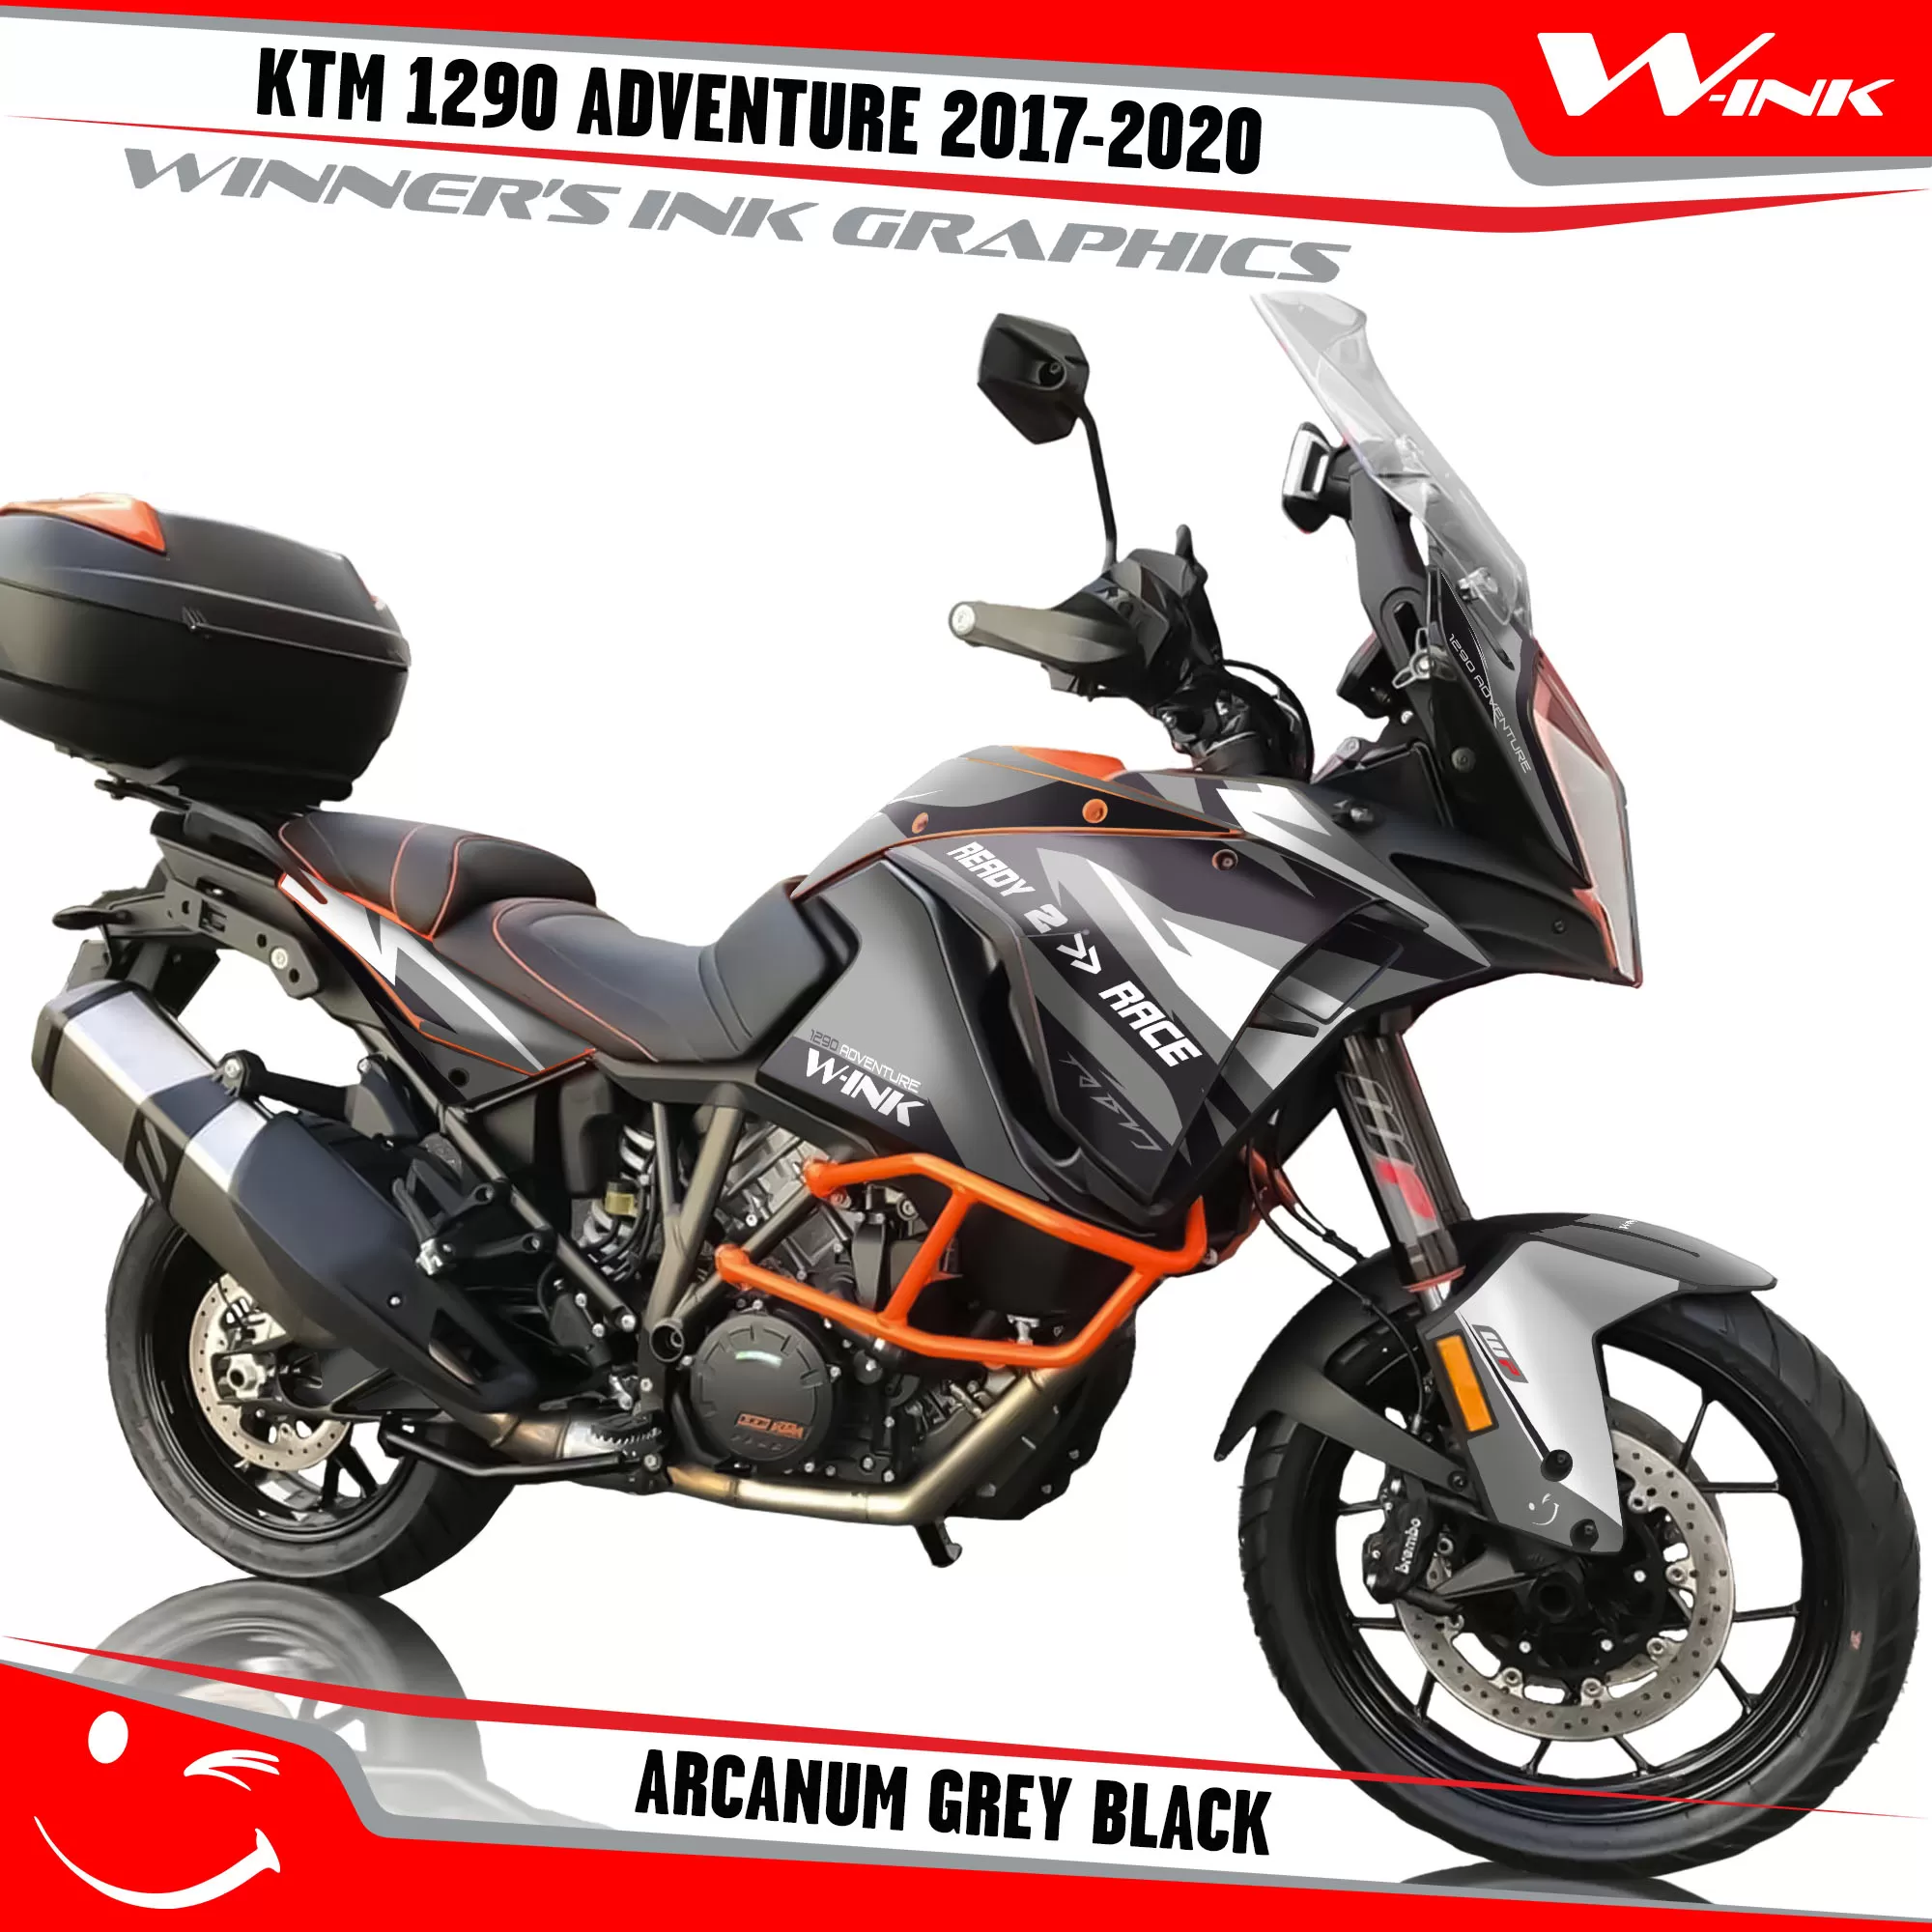 KTM-Adventure-1290-2017-2018-2019-2020-graphics-kit-and-decals-Arcanum-Grey-Black